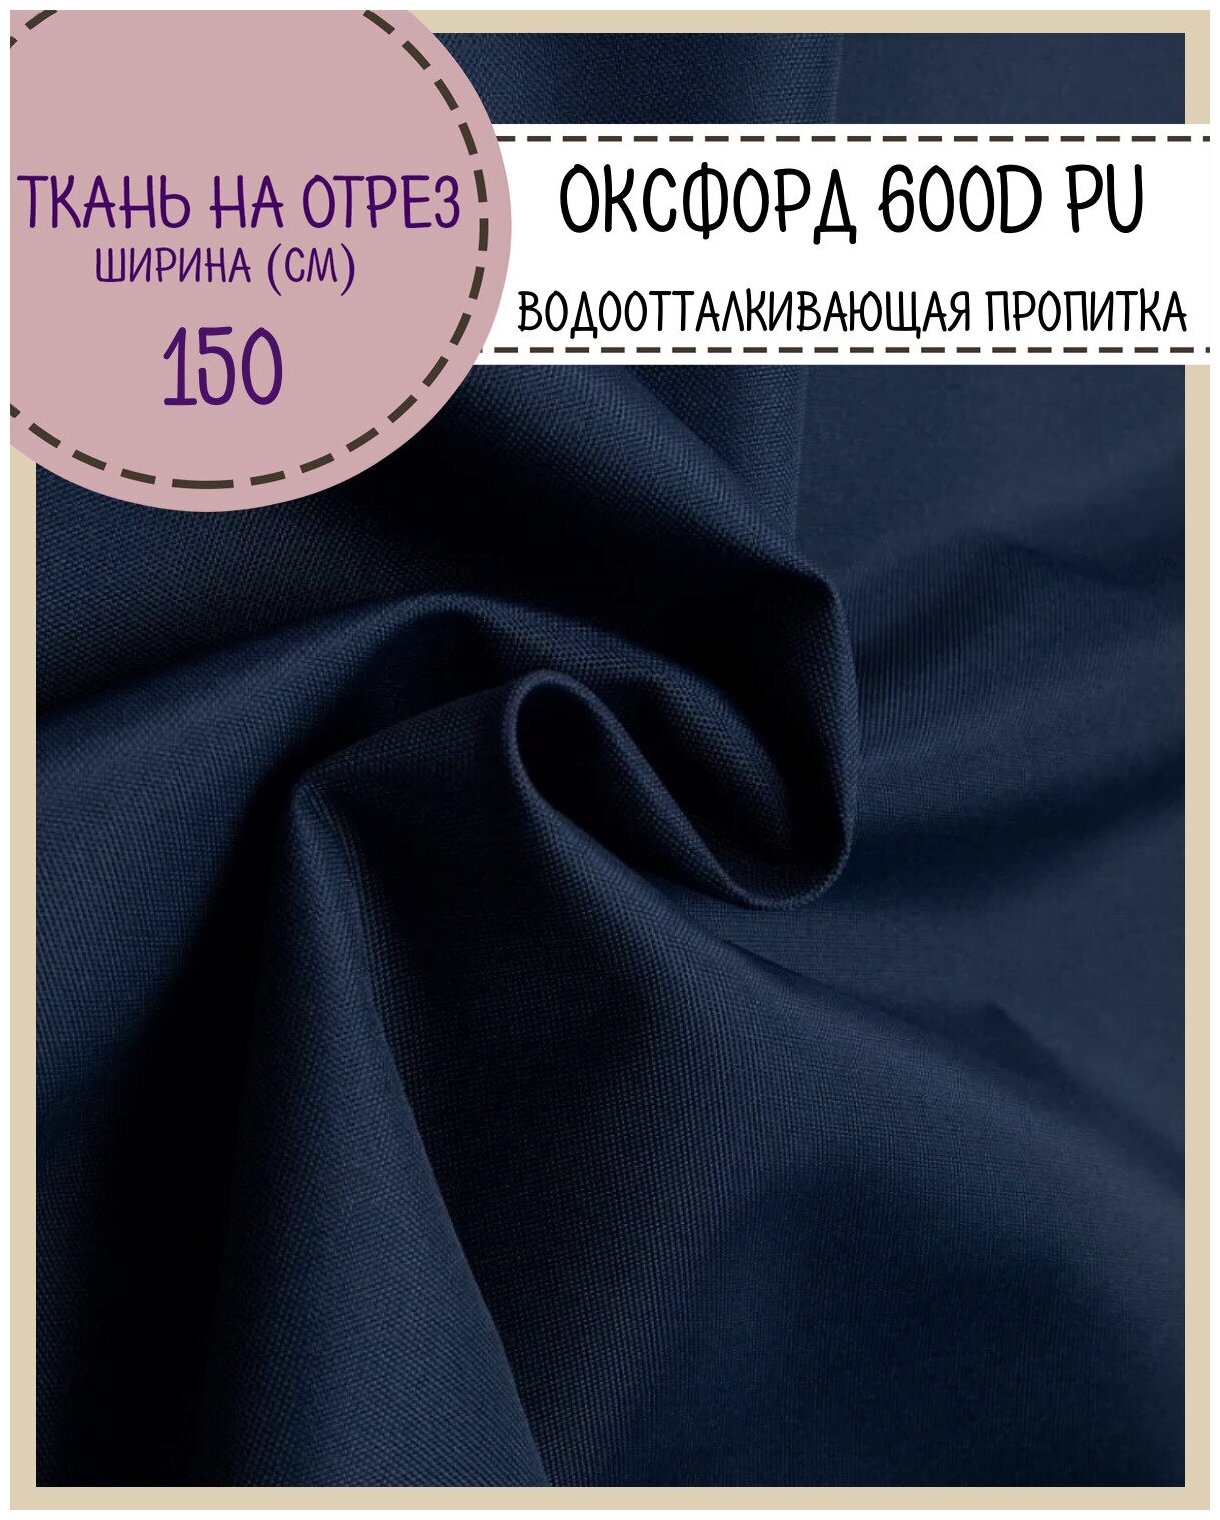 Ткань Оксфорд 600D PU 1000, пропитка водоотталкивающая, цв. т. синий, ш-150 см, на отрез, цена за пог. метр